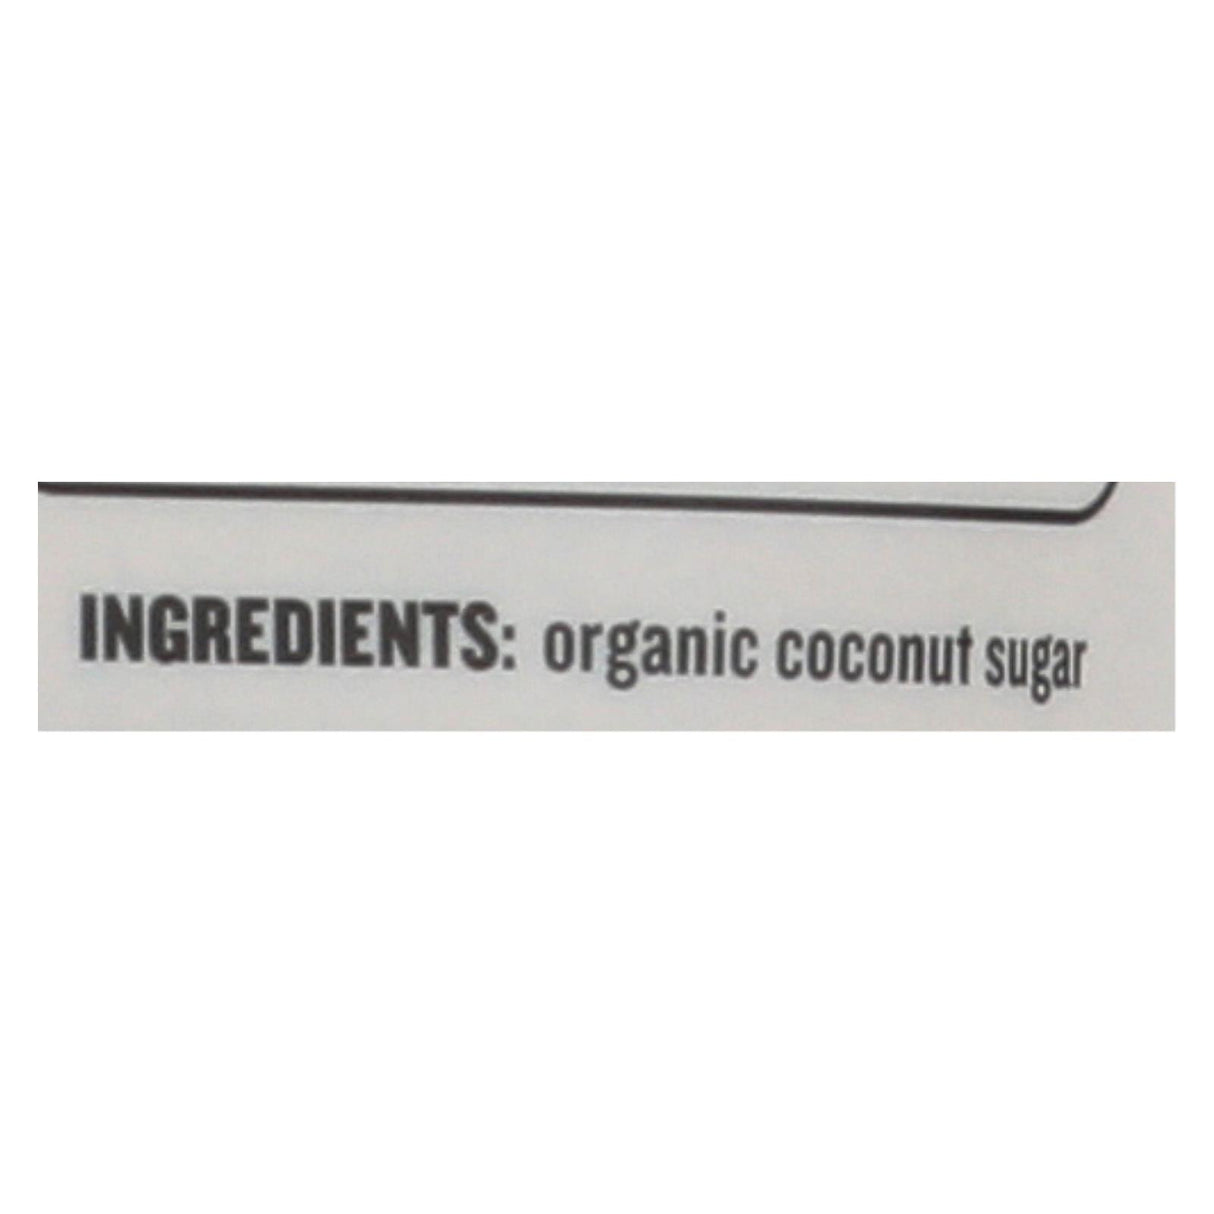 Organic Madhava Coconut Sugar 16 Oz. (Pack of 6) - Cozy Farm 